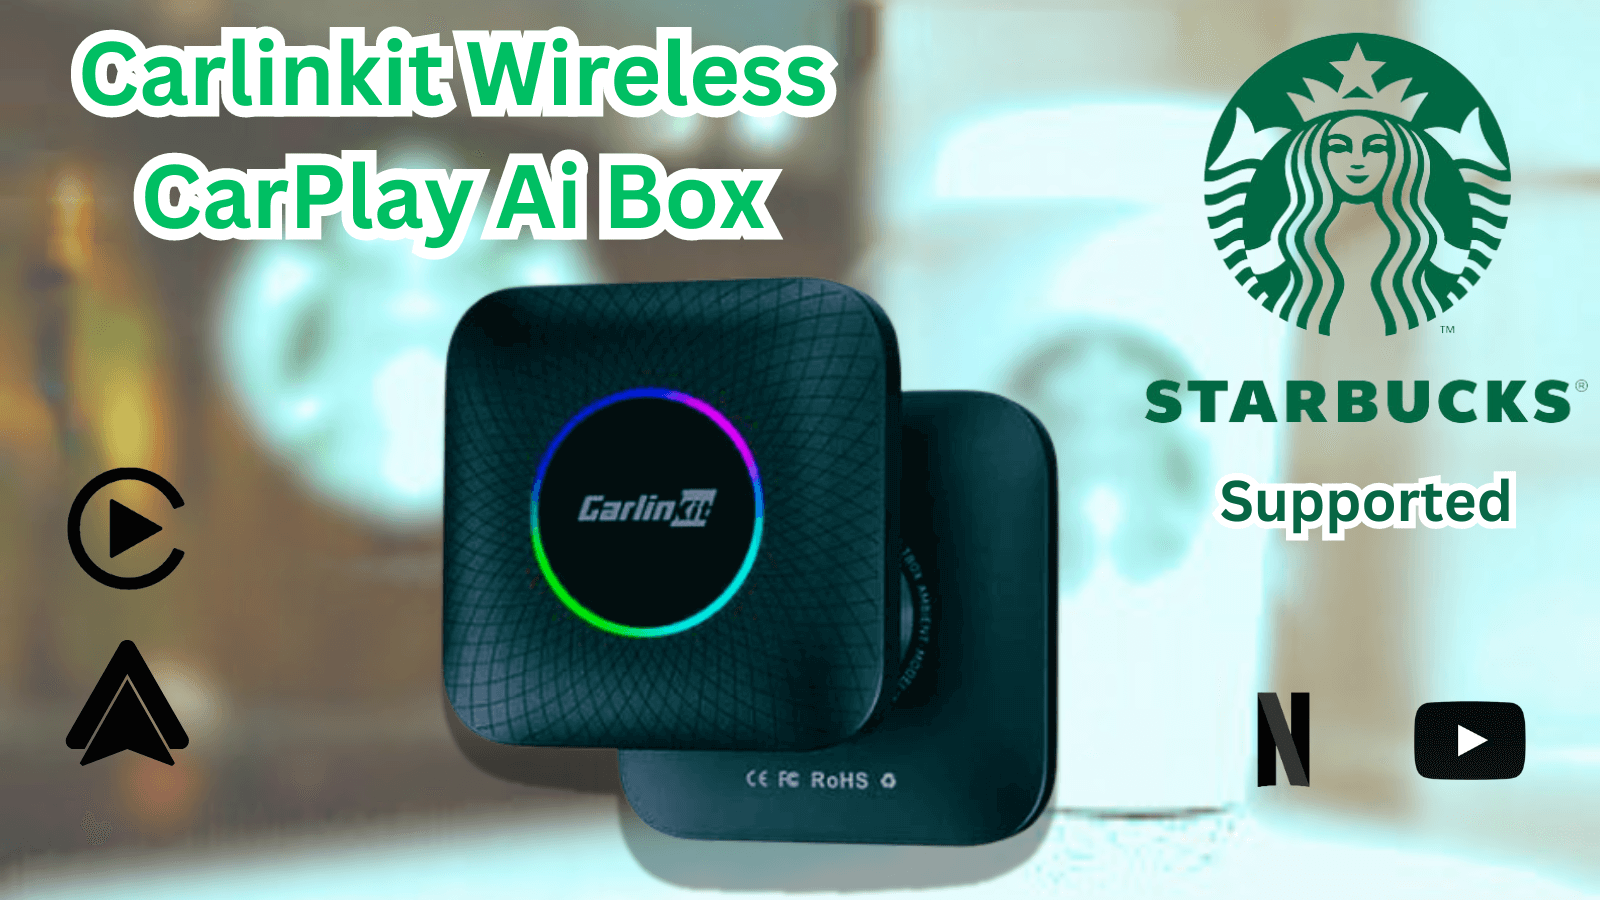 Carlinkit wireless CarPlay Ai Box